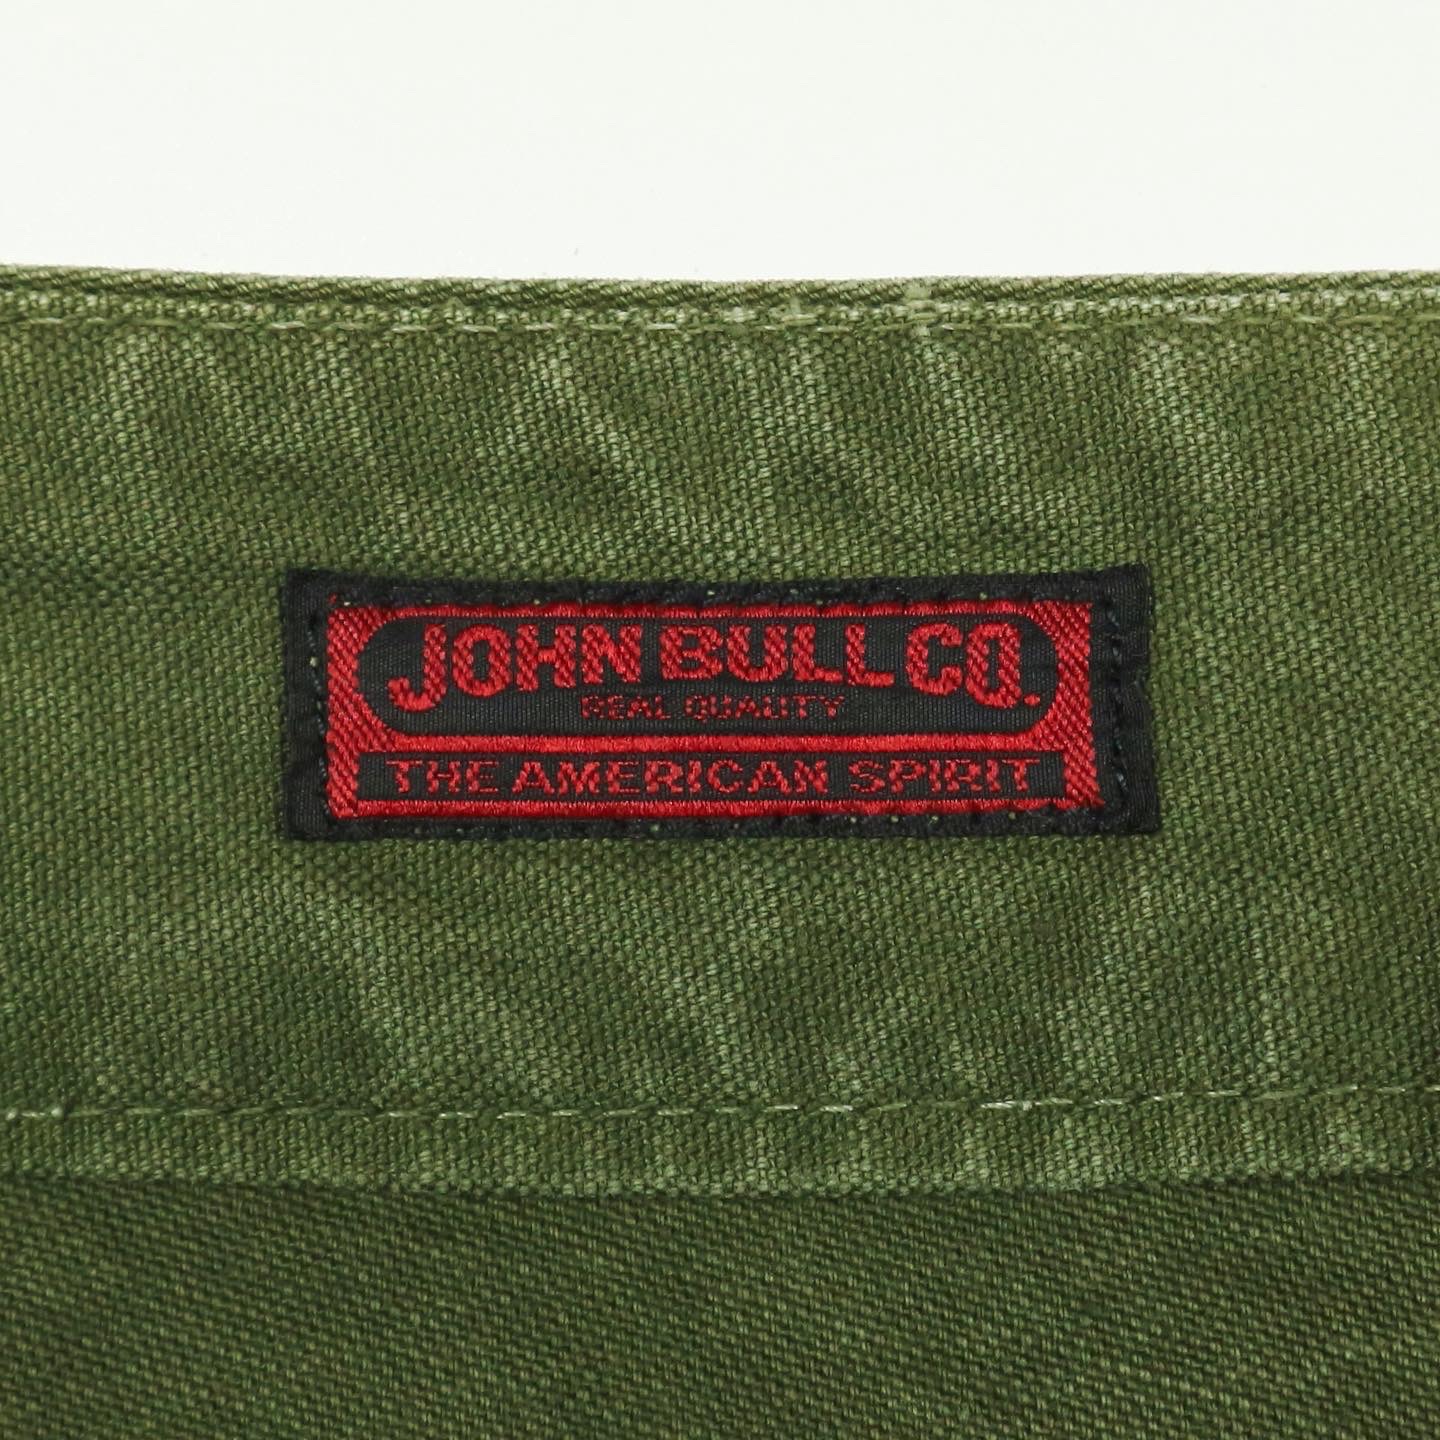 Johnbull Canvas Cargo Pants Size 29